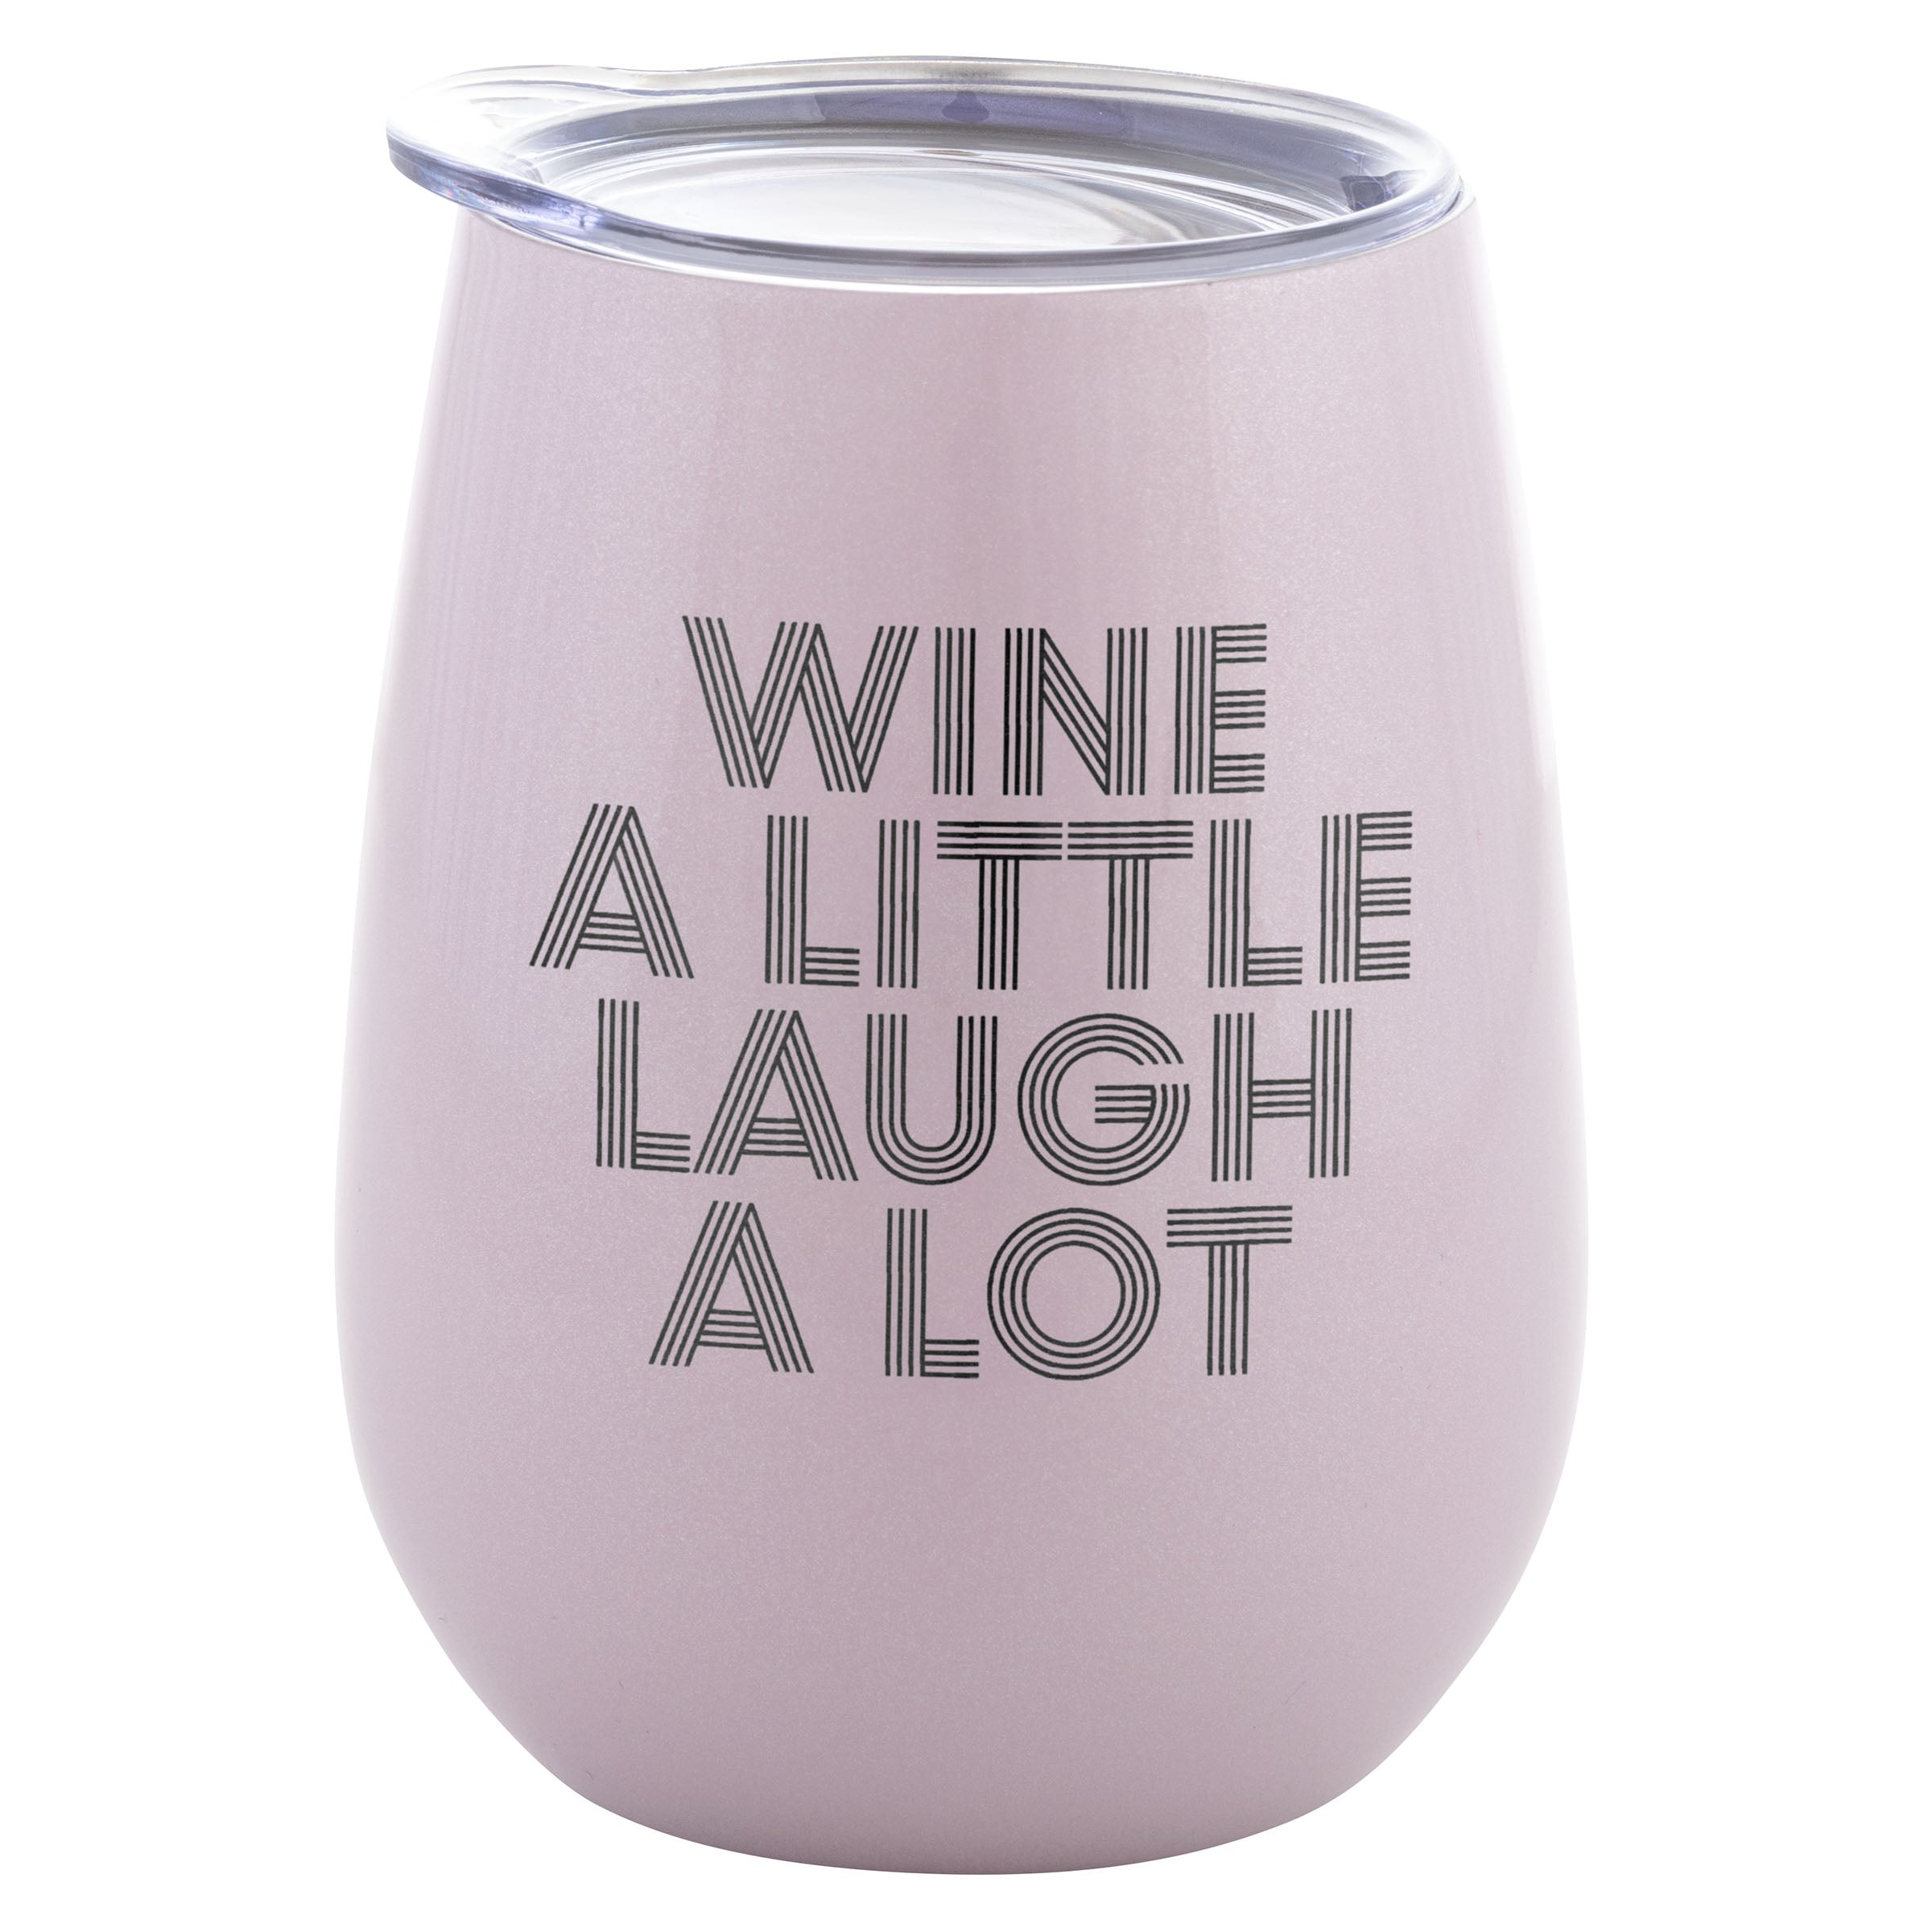 Engraved Wine Tumbler, Wine a Little Laugh a Lot / Let's Wine